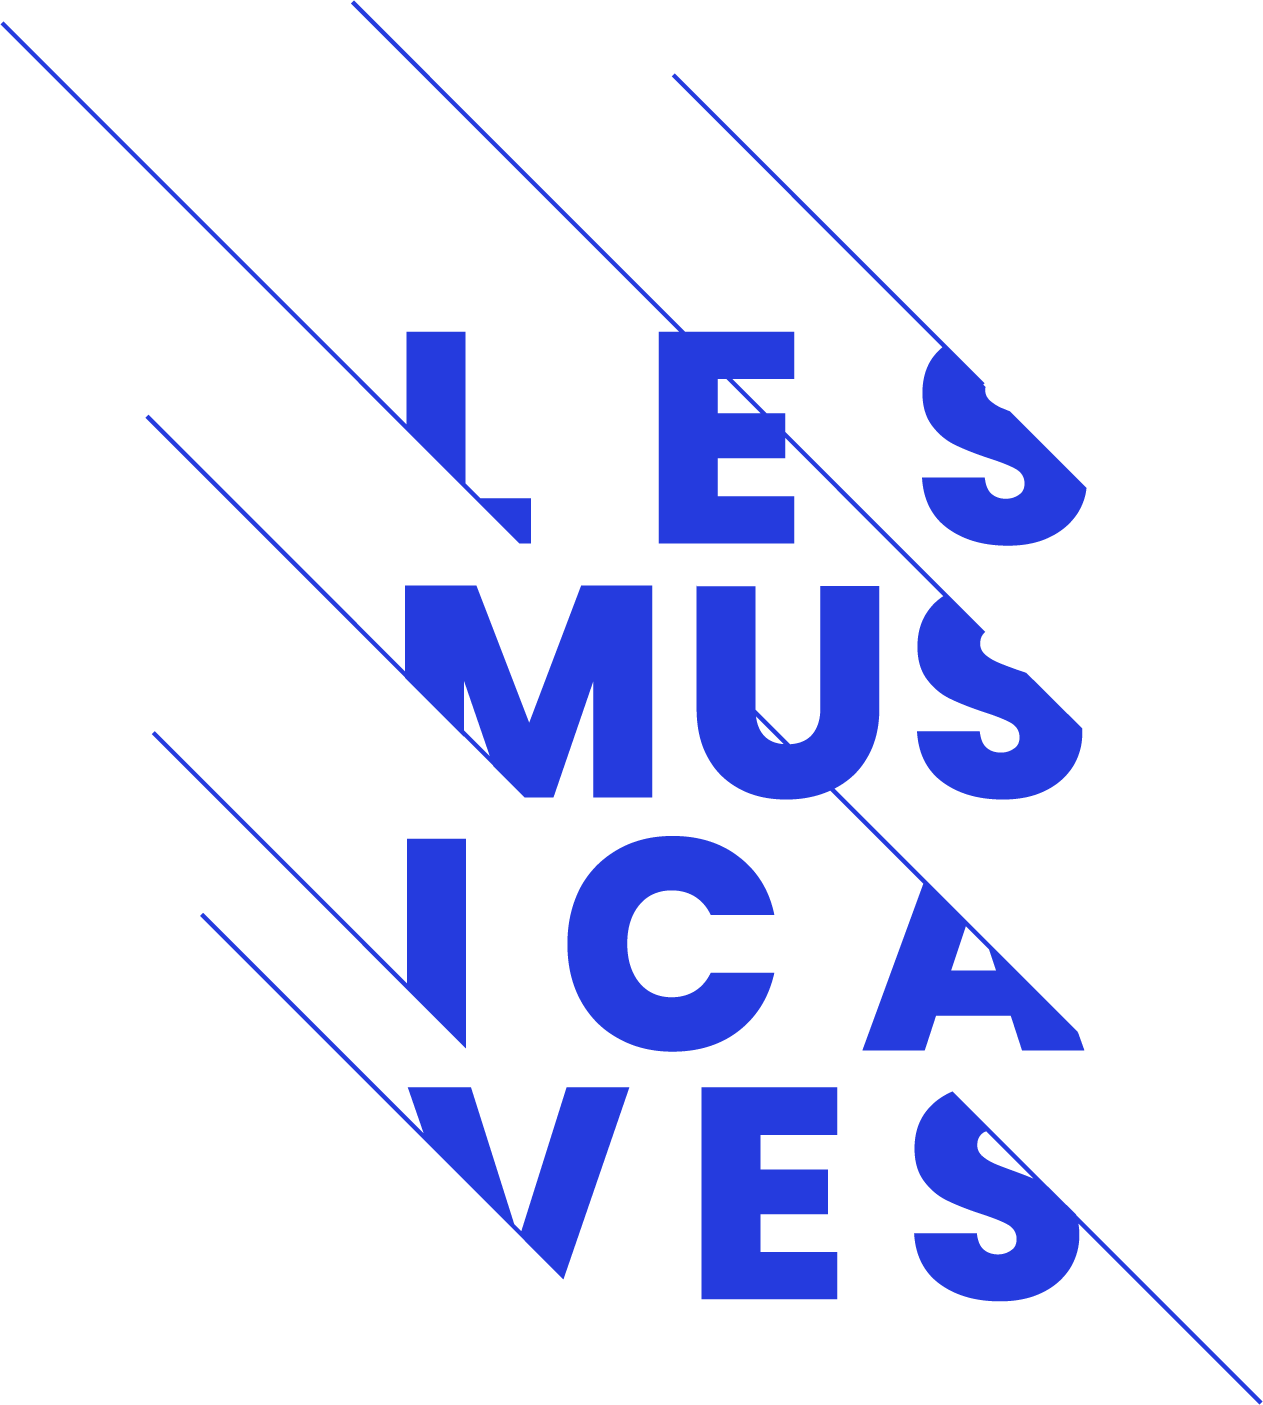 Logo Musicaves 2024